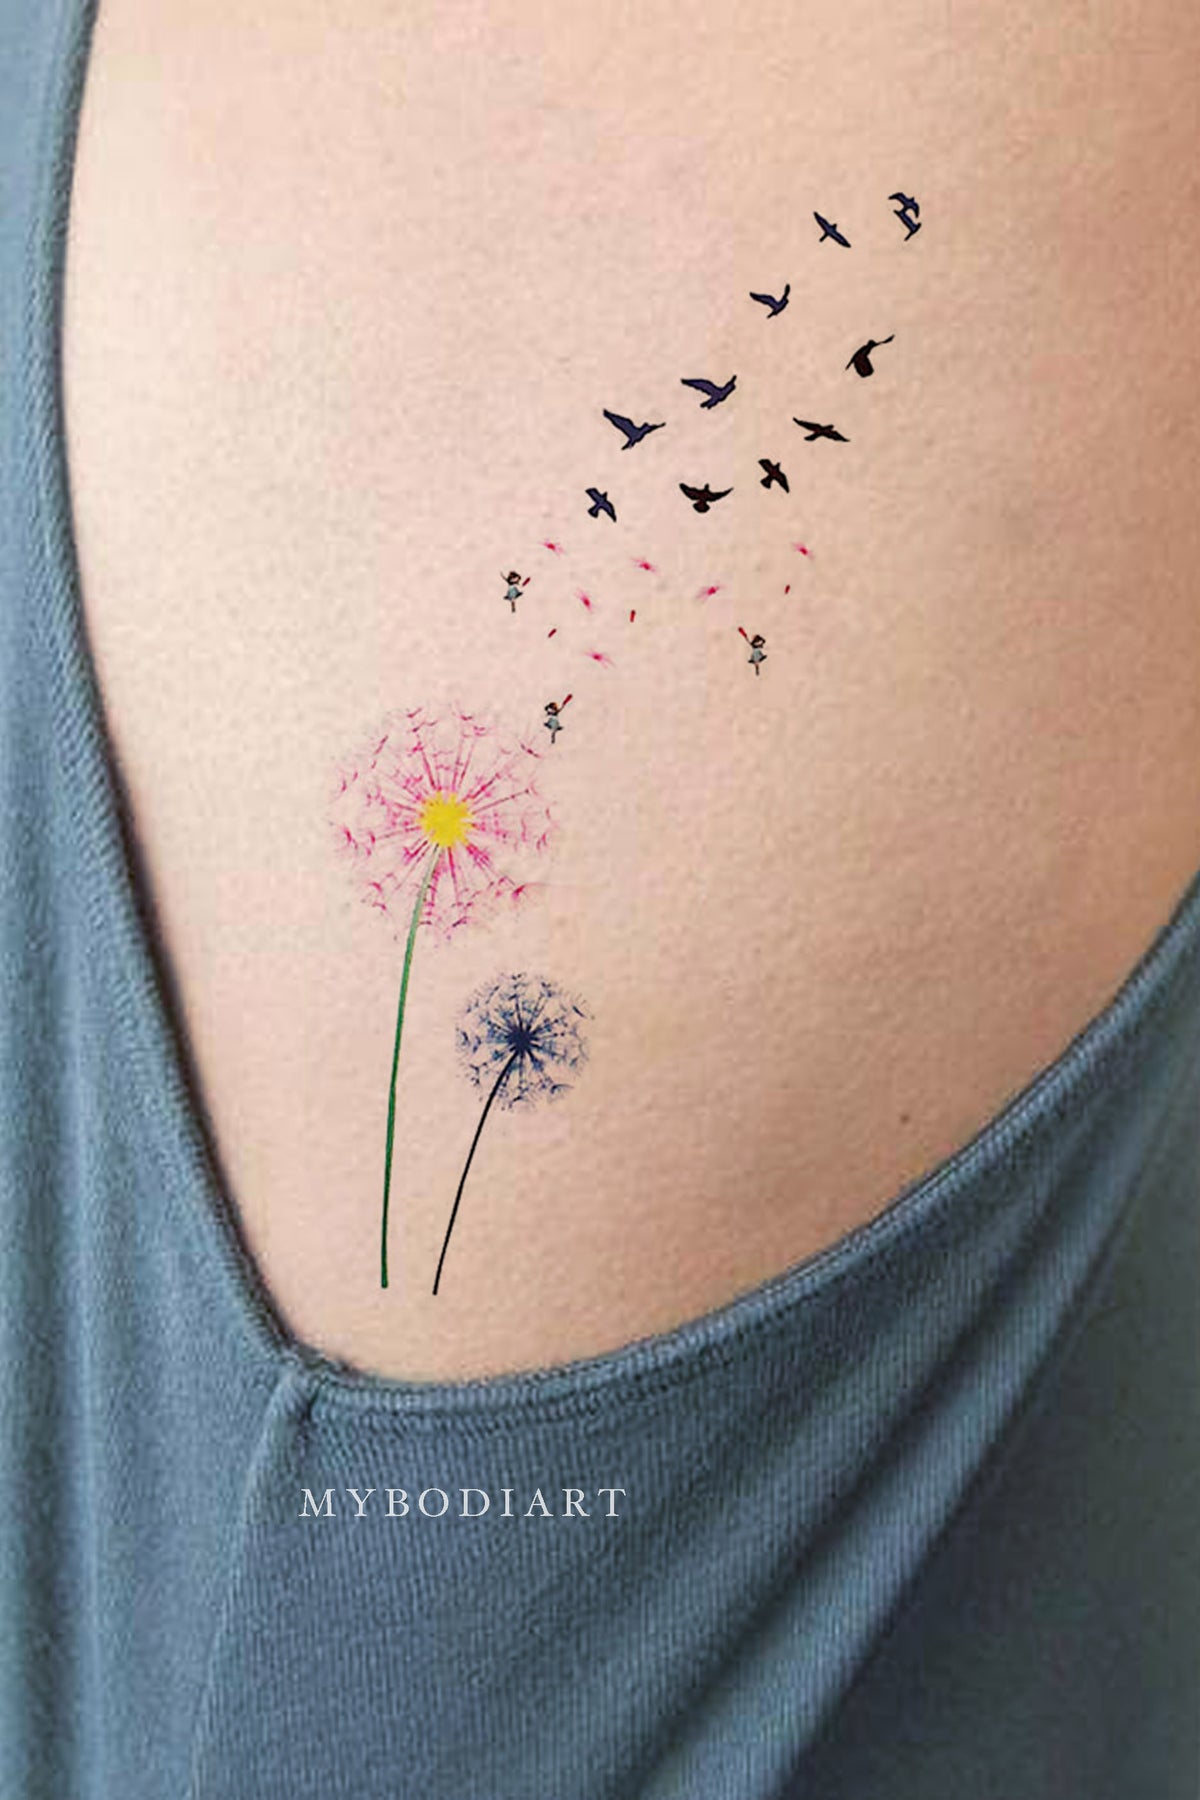 Azarja van der Veen on Twitter Watercolor dandelion tattoo tattoos  tattooer flower flowers dandelion watercolor watercolortattoo  breathe ribtattoo httpstcopBIKQnJWjp httpstco2P0hg6KwGR   Twitter